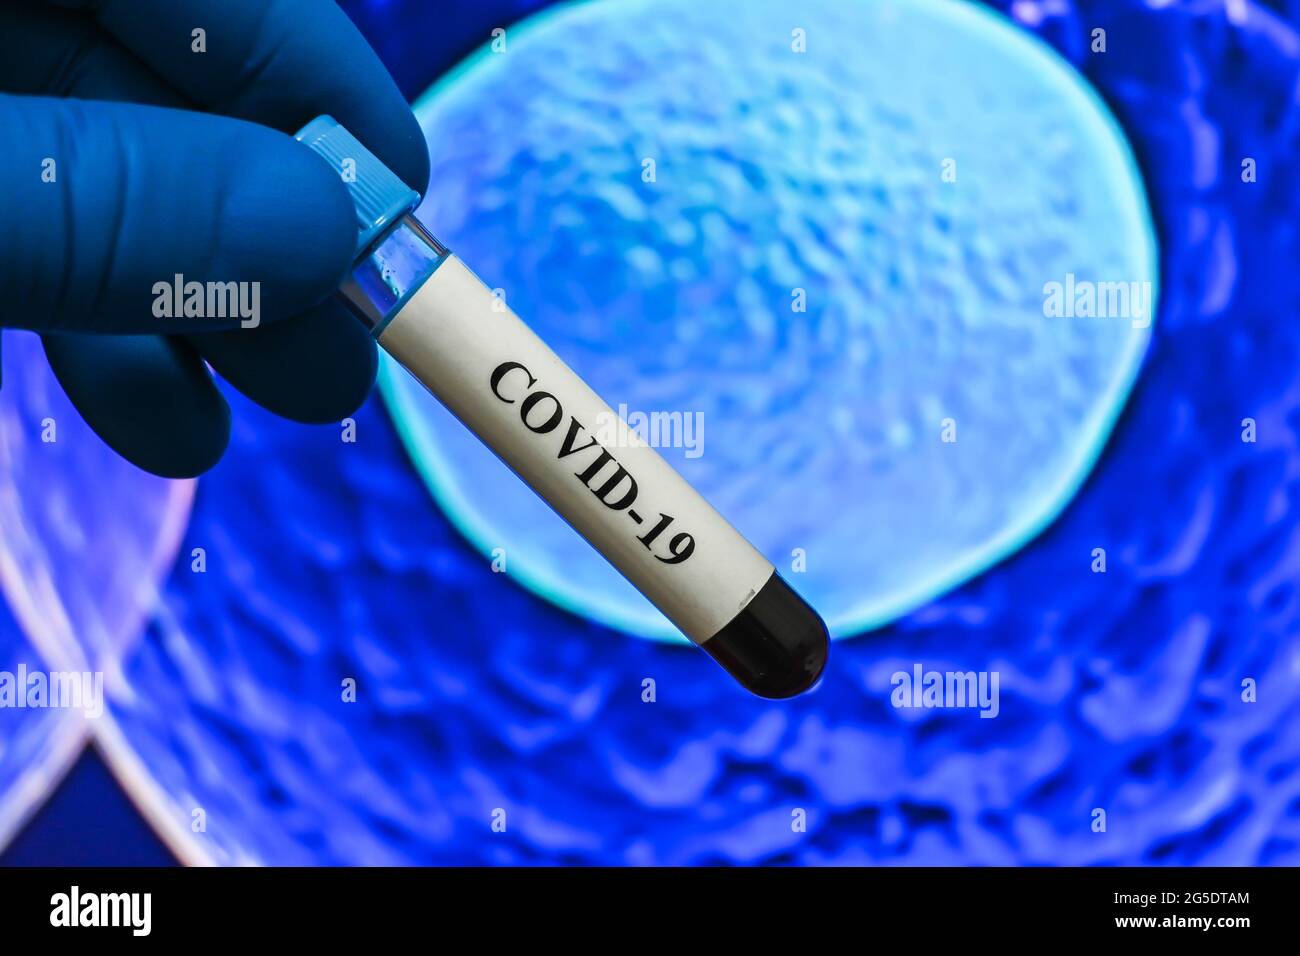 Coronavirus research. Laboratory study of the virus - the causative agent of COVID-19. Stock Photo